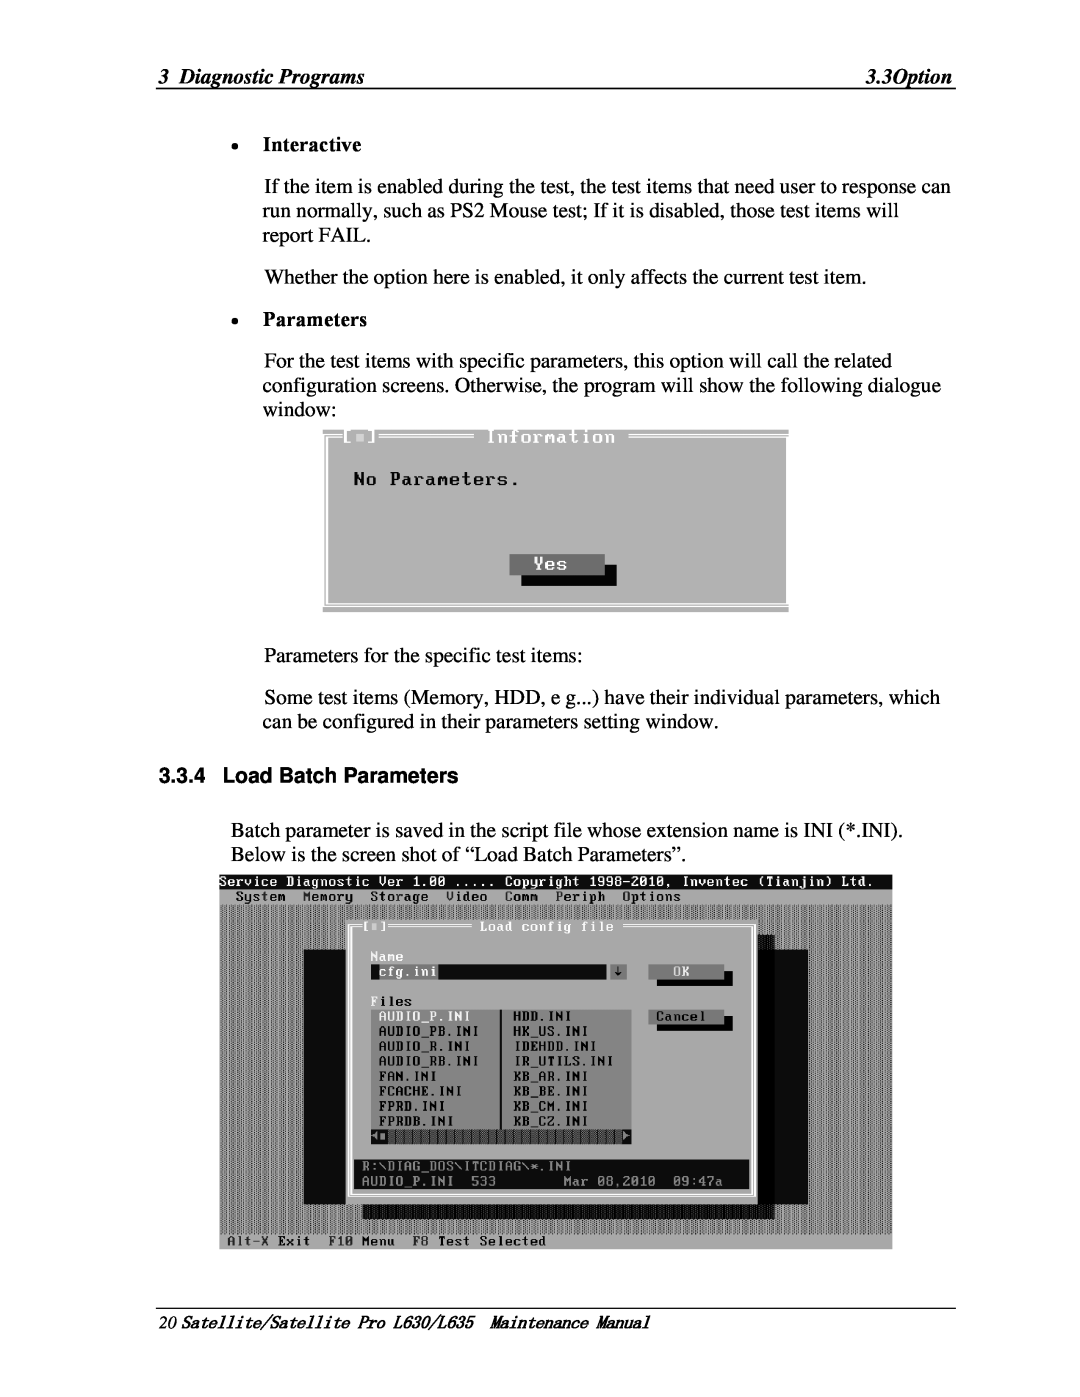 Toshiba L635, L630 manual ∙ Interactive, ∙ Parameters, Load Batch Parameters 